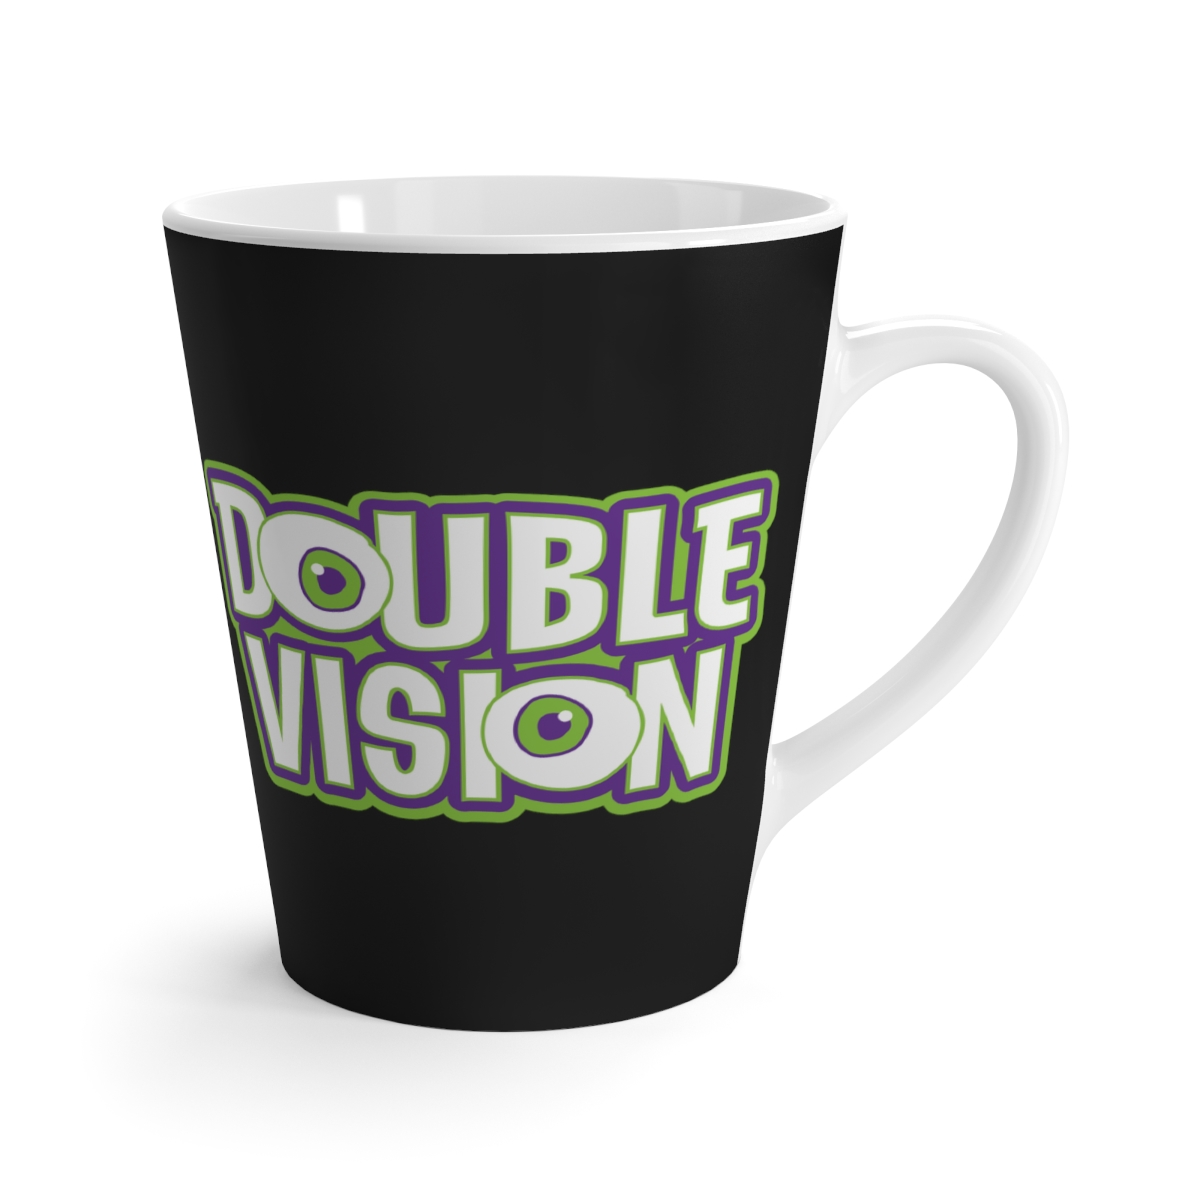 DoubleVision! {Coffee Mug} product thumbnail image